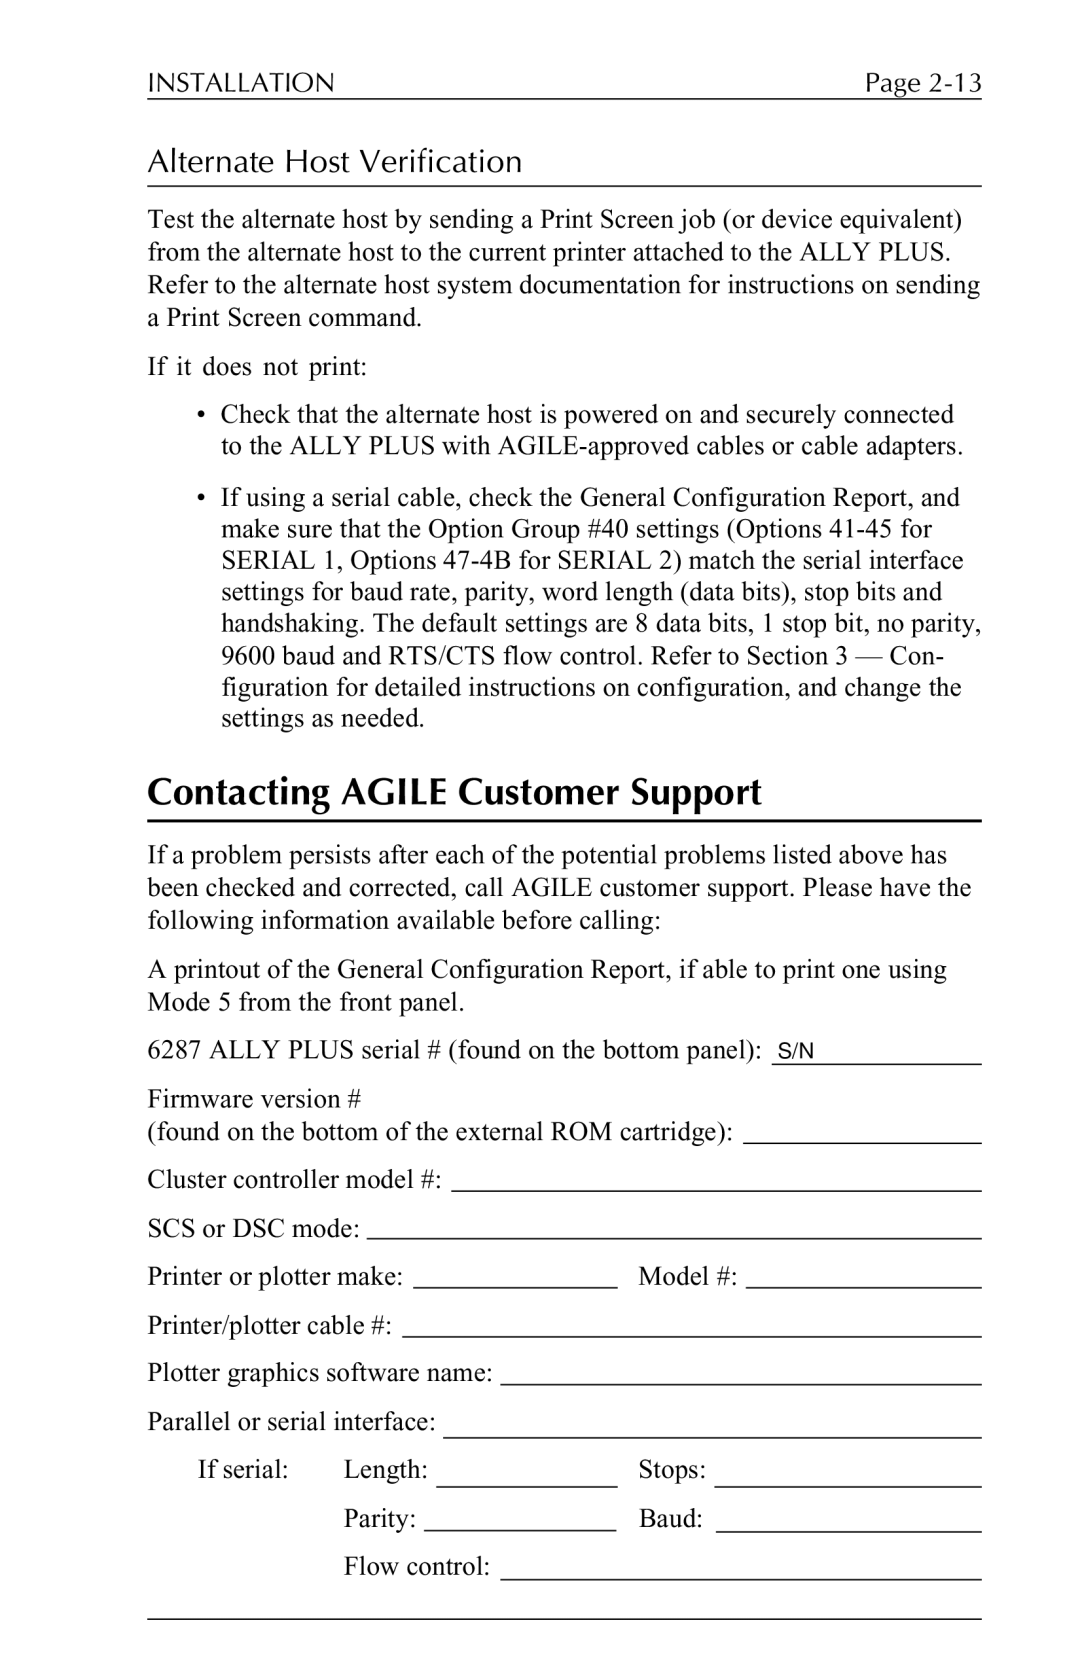 Xerox 6287 user manual Contacting Agile Customer Support, Alternate Host Verification 